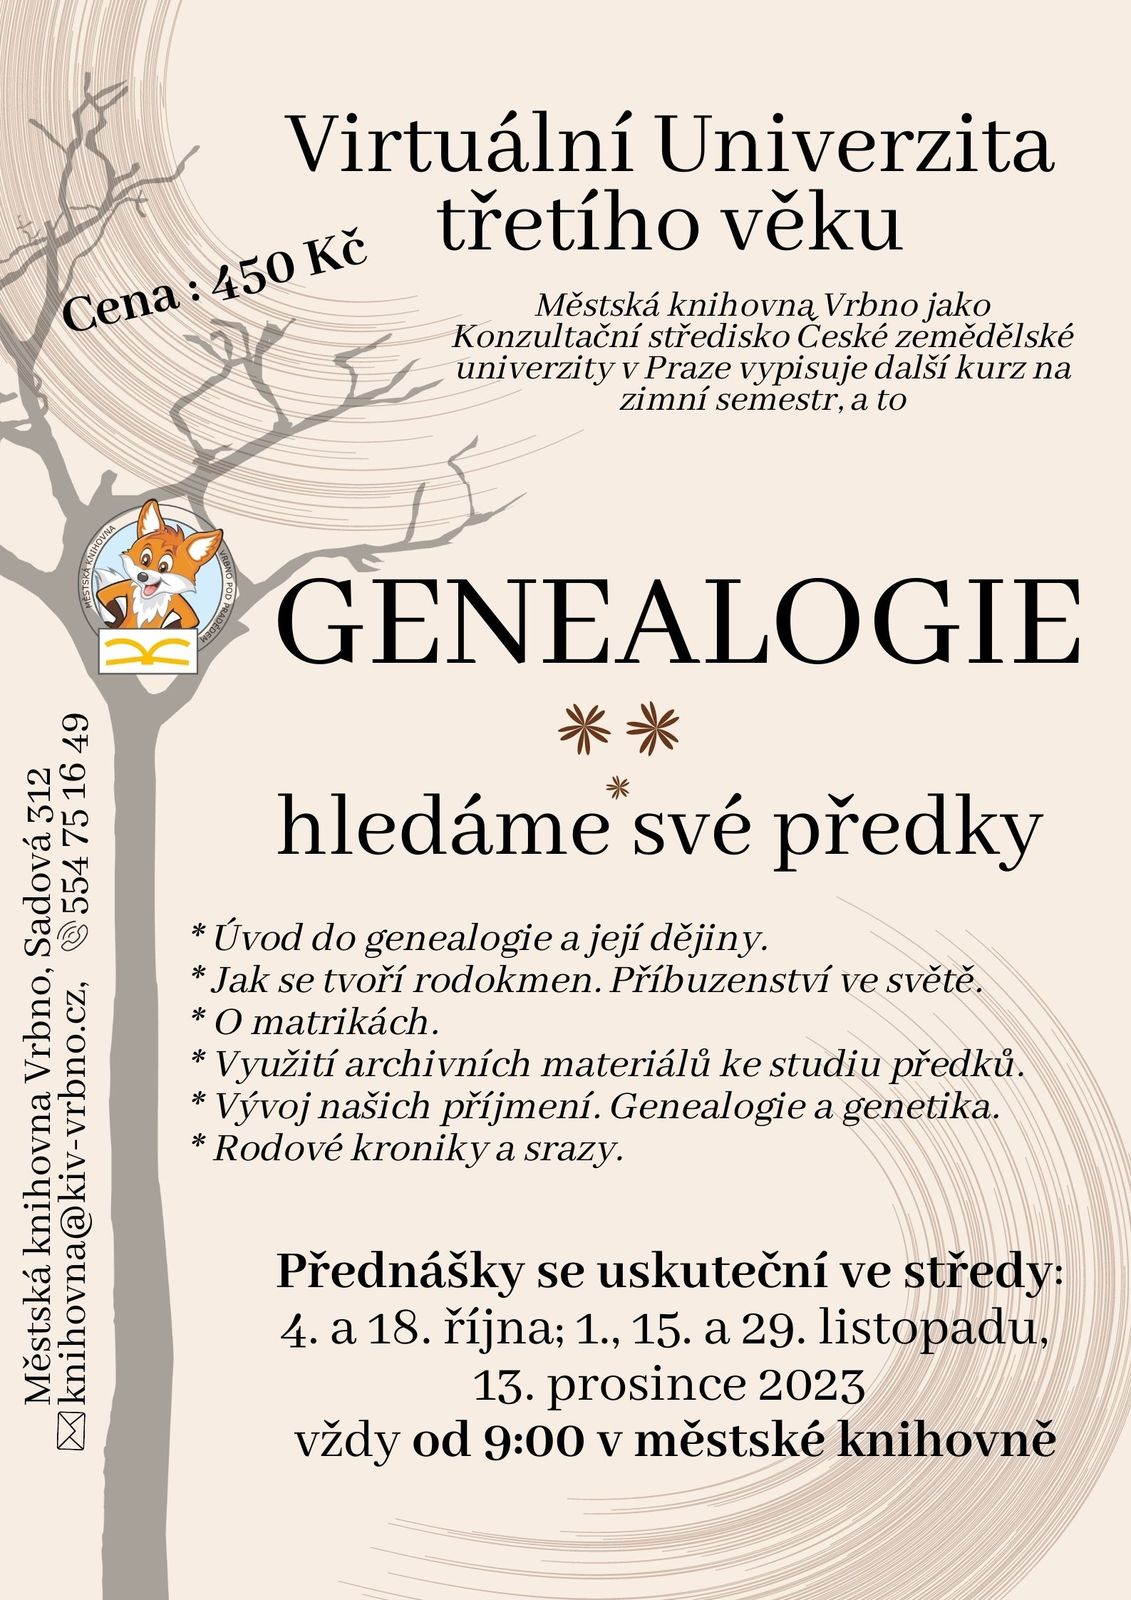 VU3V - Genealogie.jpg